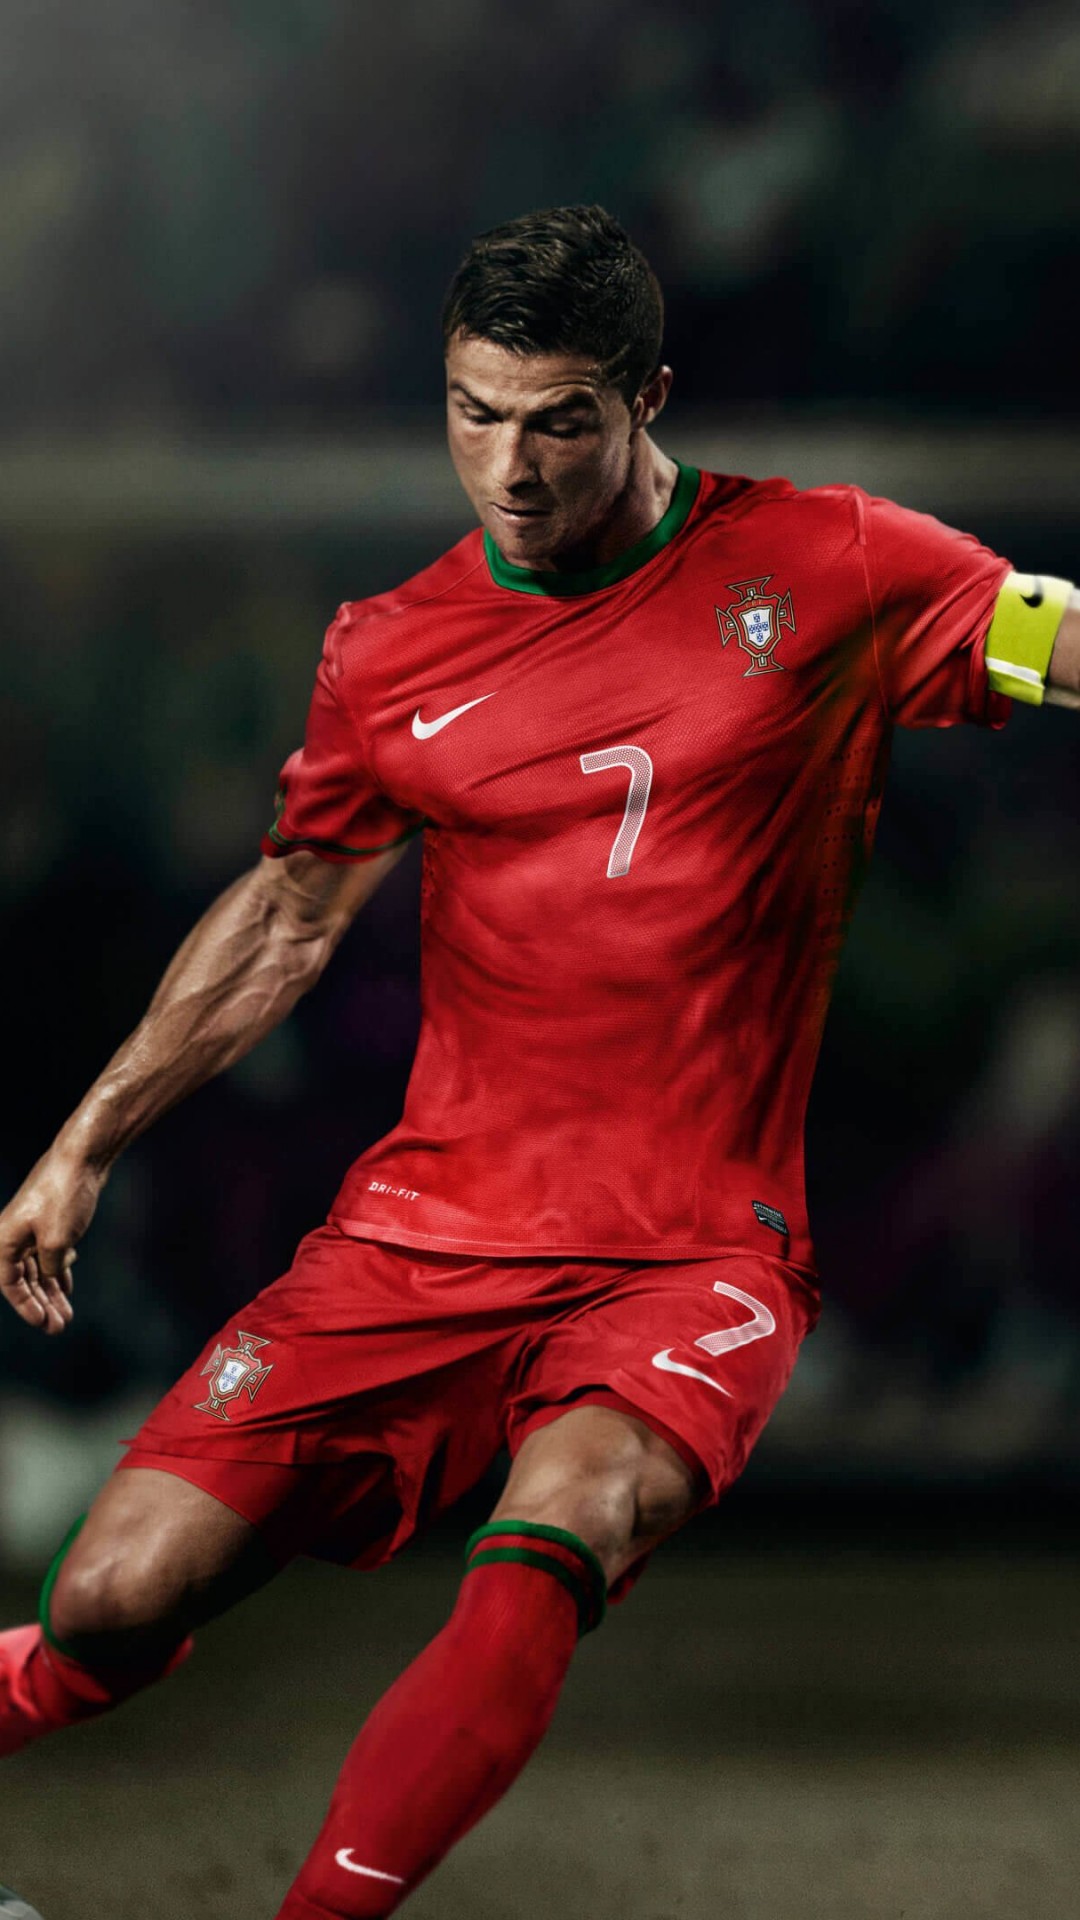 Cristiano Ronaldo In Portugal Jersey Wallpaper for HTC One